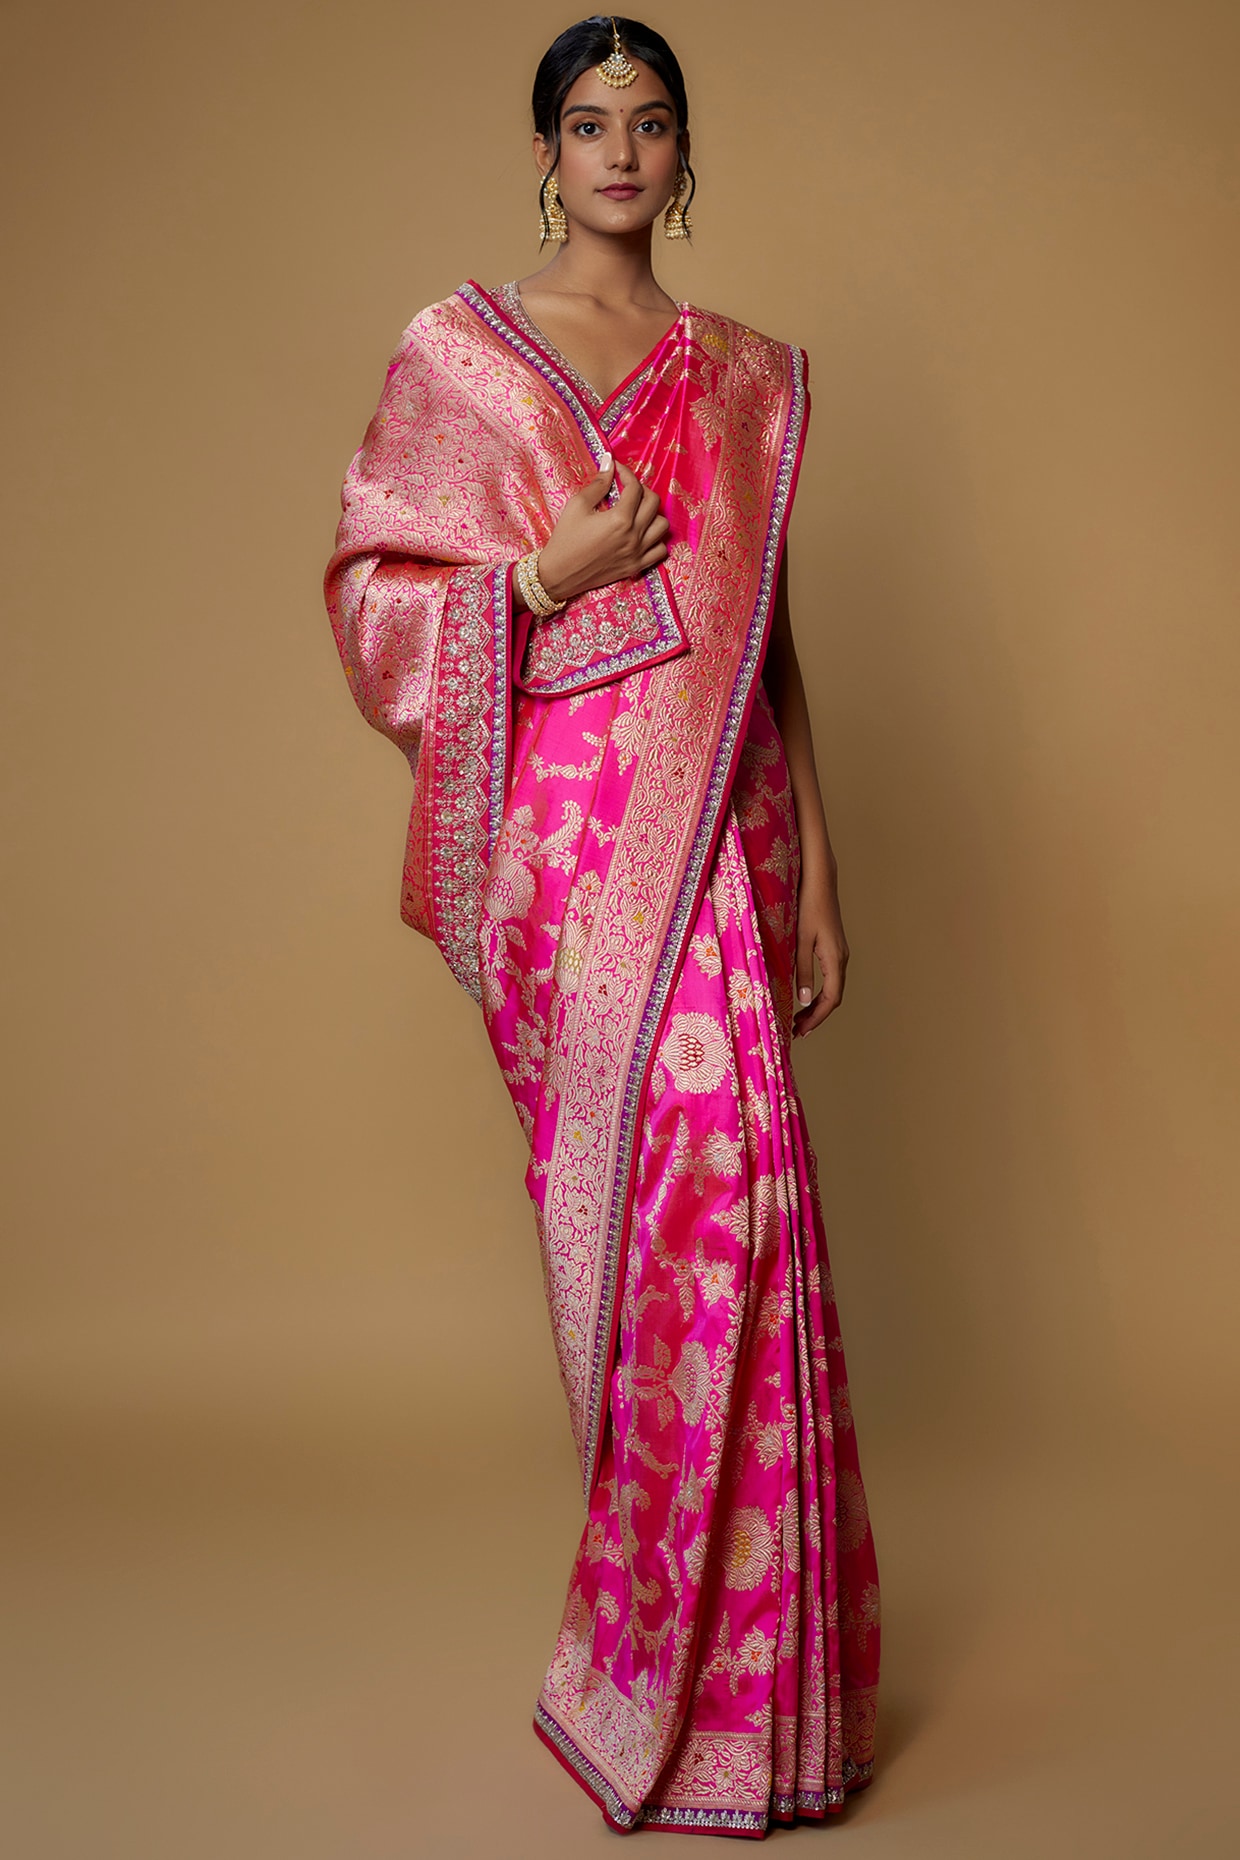 Buy Banarasi Silk Sarees online at Best Prices dvz0003520 - dvanza.com